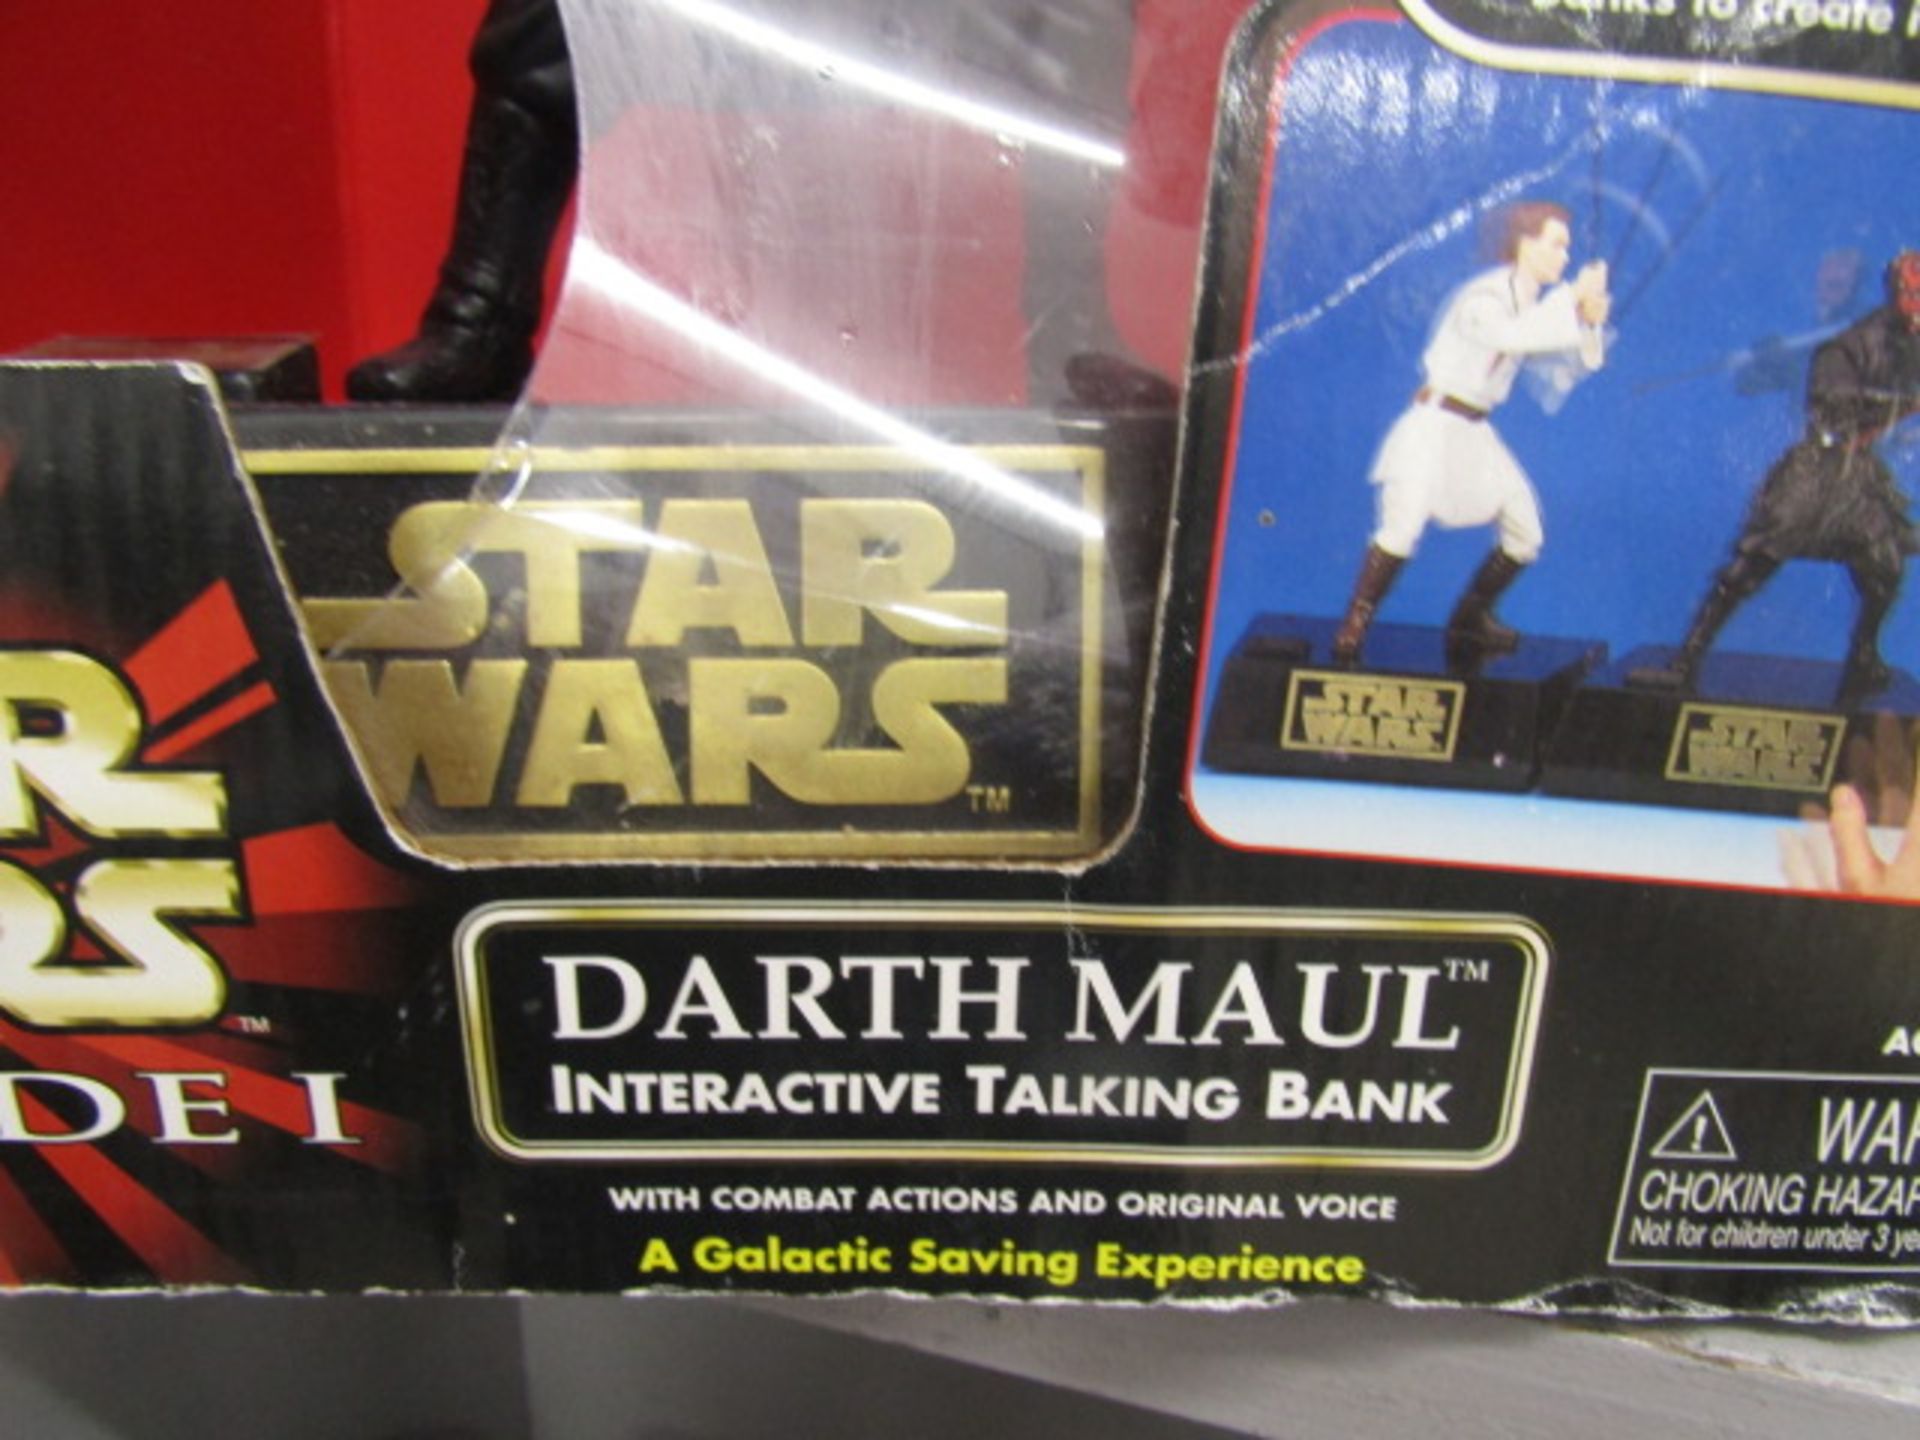 Star Wars Darth Maul talking bank in box  Box is slightly a/f - Image 3 of 3